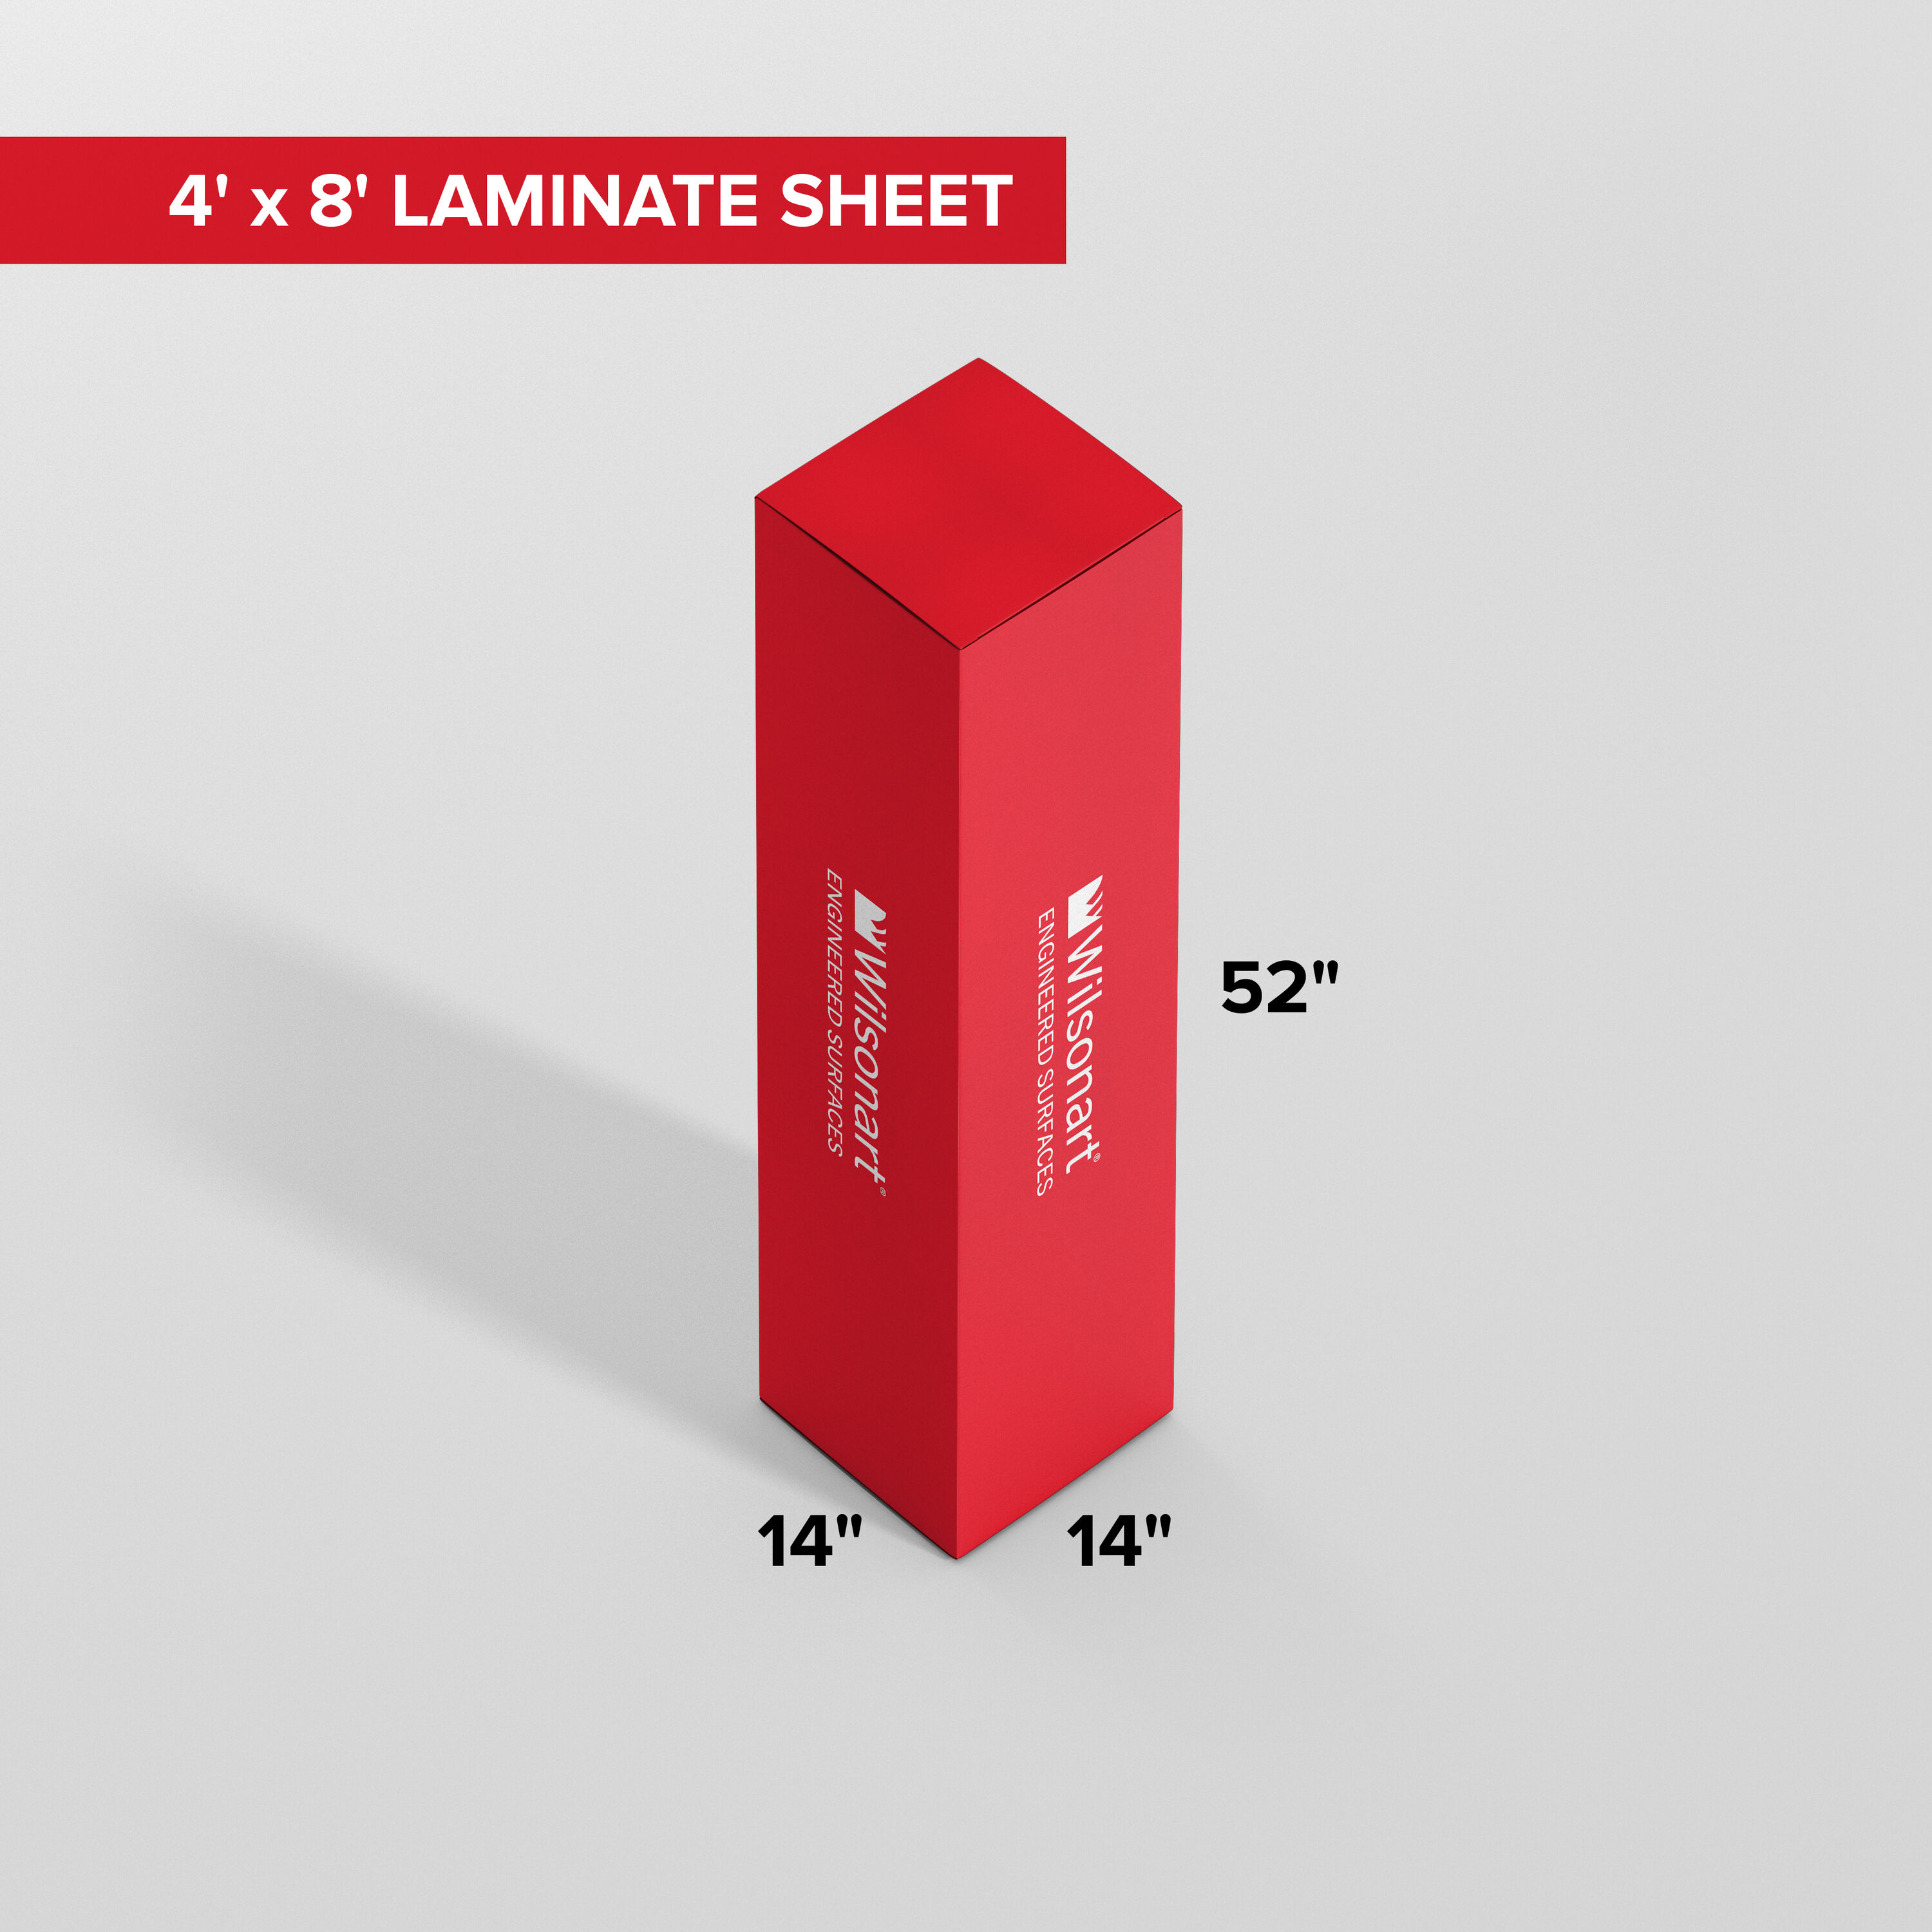 Wilsonart 3 ft. x 8 ft. Laminate Sheet in Landmark Wood with Premium SoftGrain Finish